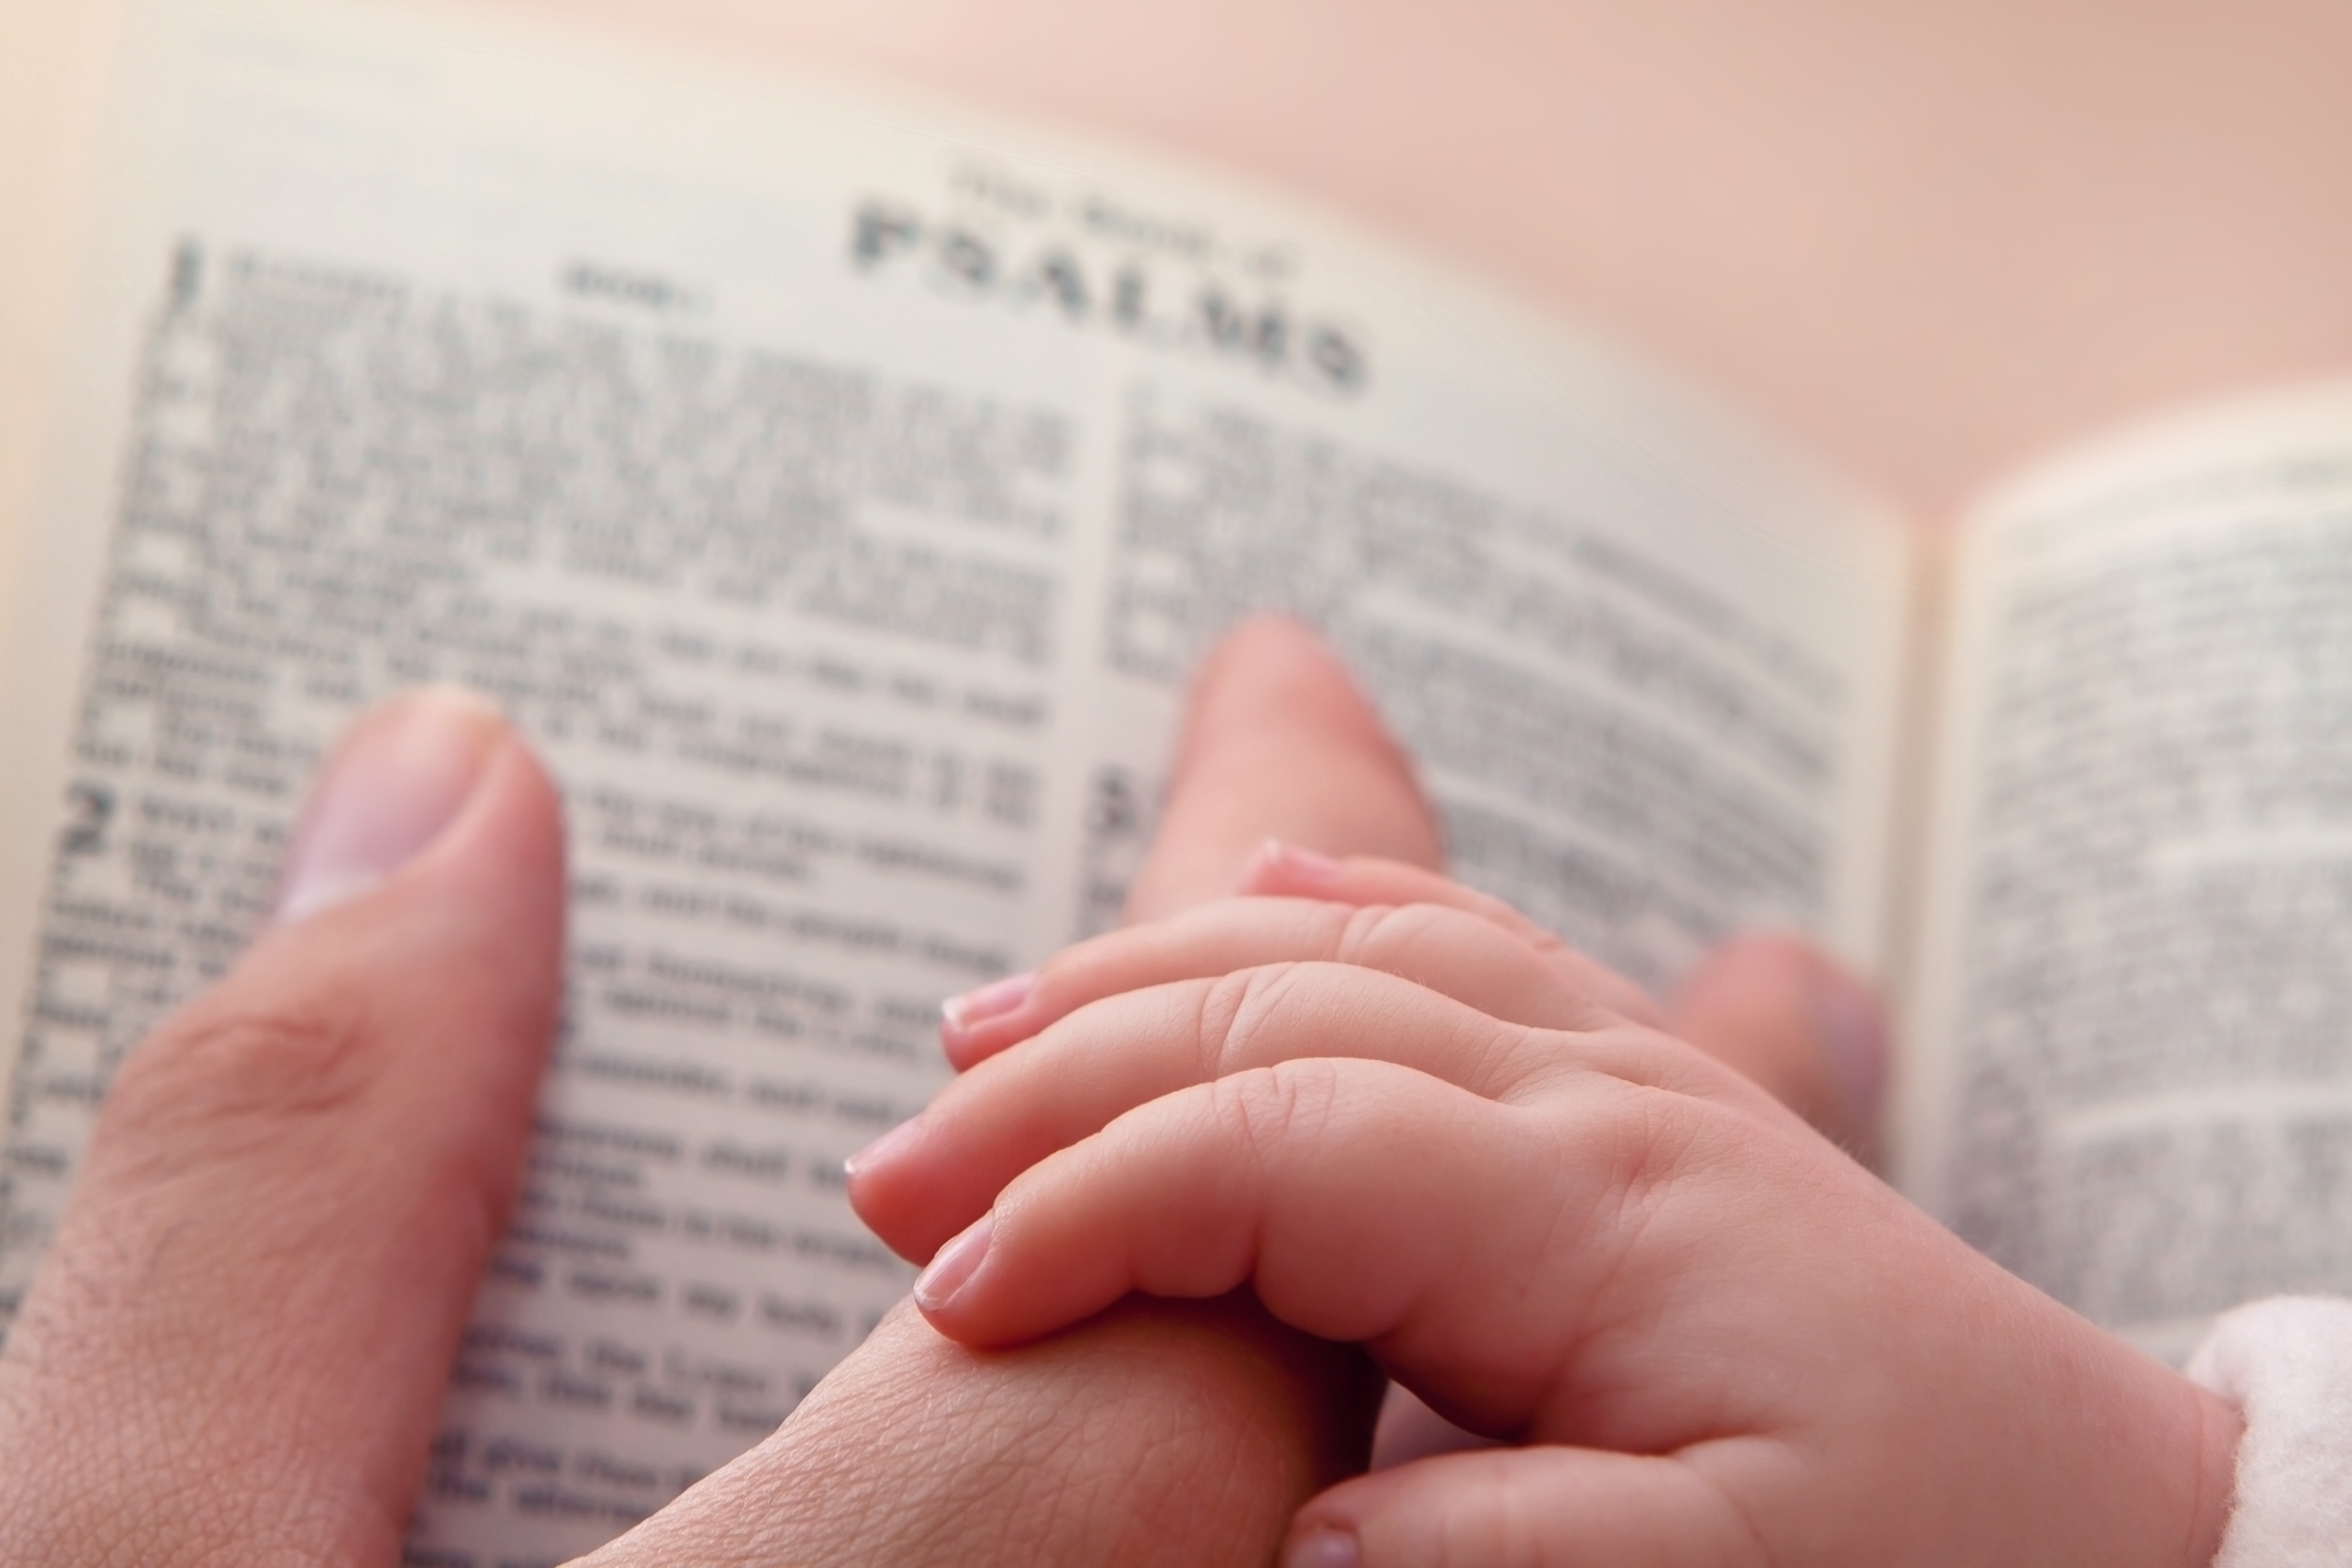 Bible-baby-hand